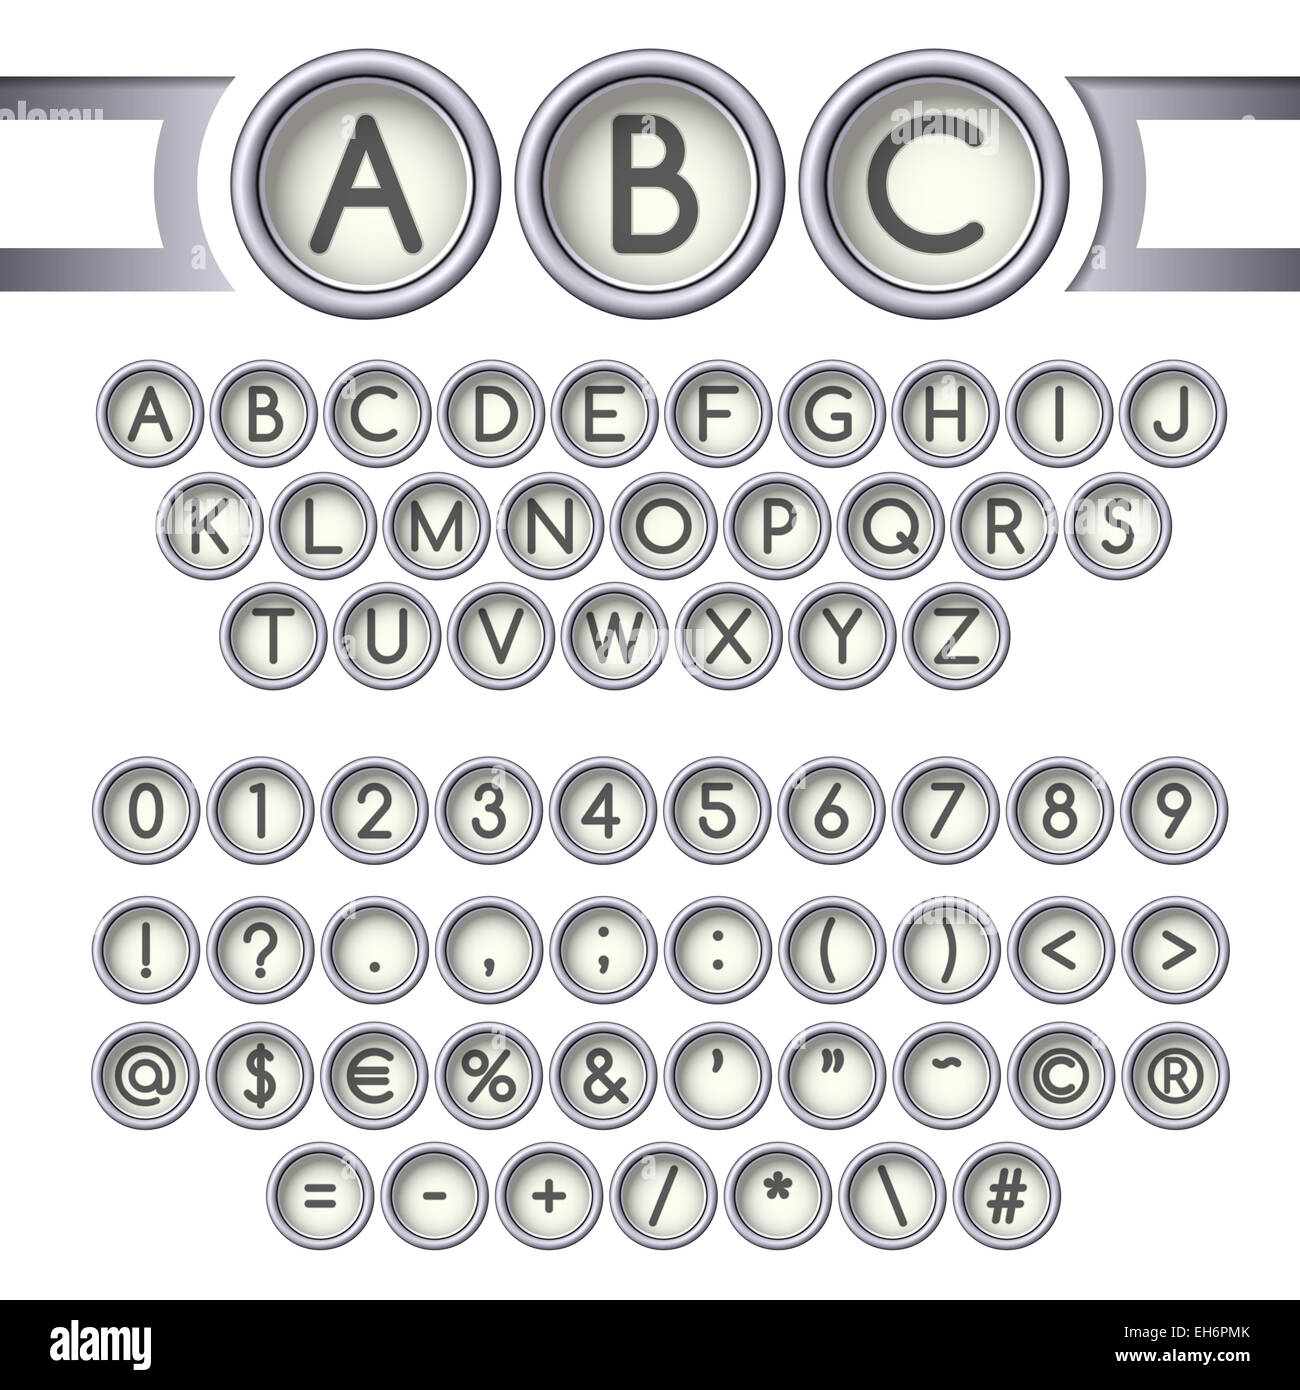 Typewriter buttons alphabet Stock Photo - Alamy